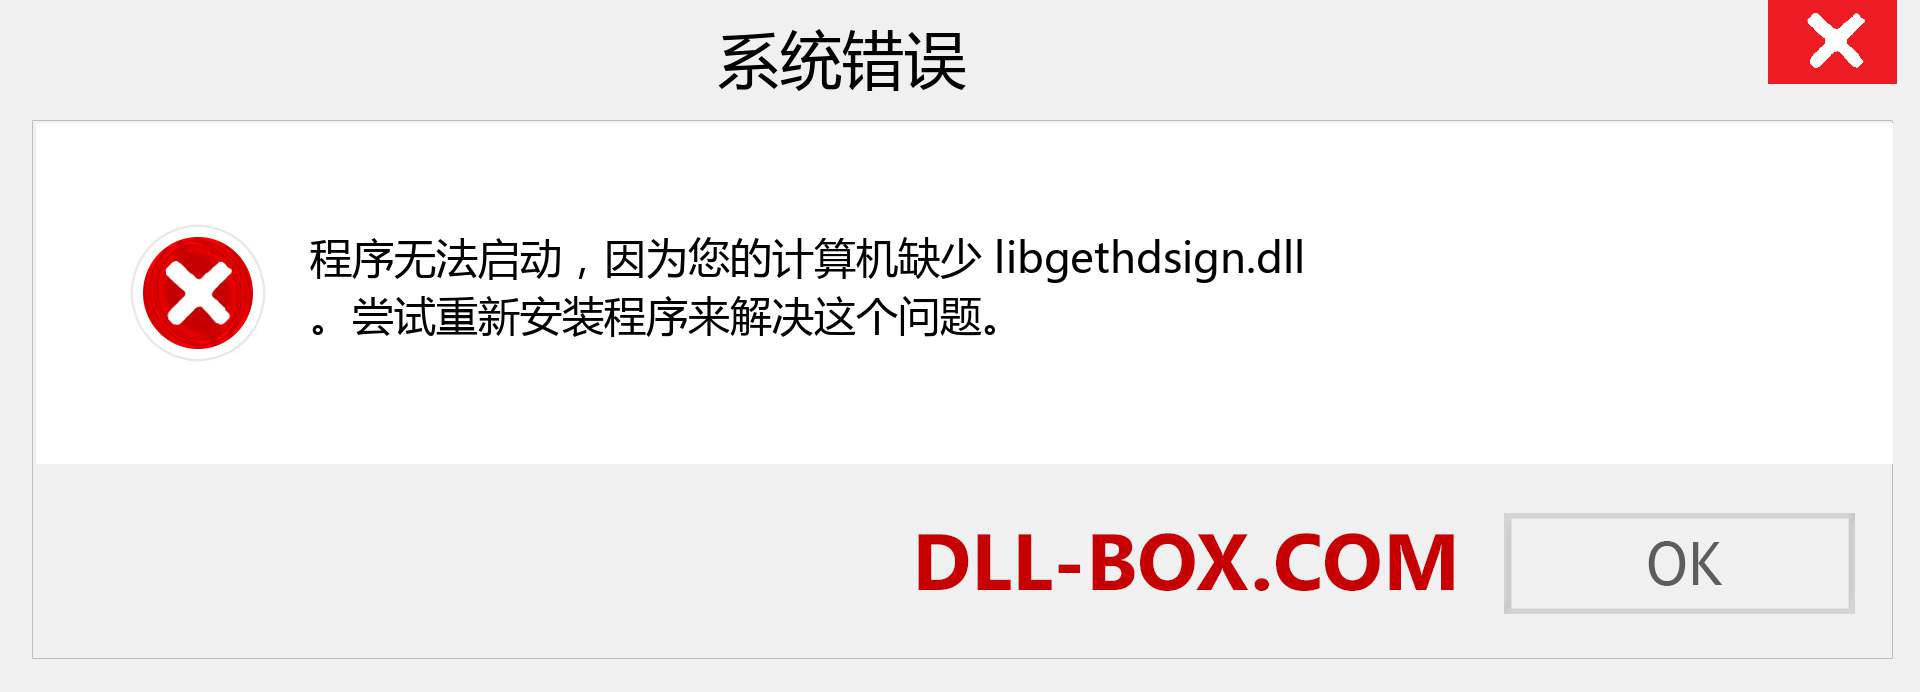 libgethdsign.dll 文件丢失？。 适用于 Windows 7、8、10 的下载 - 修复 Windows、照片、图像上的 libgethdsign dll 丢失错误